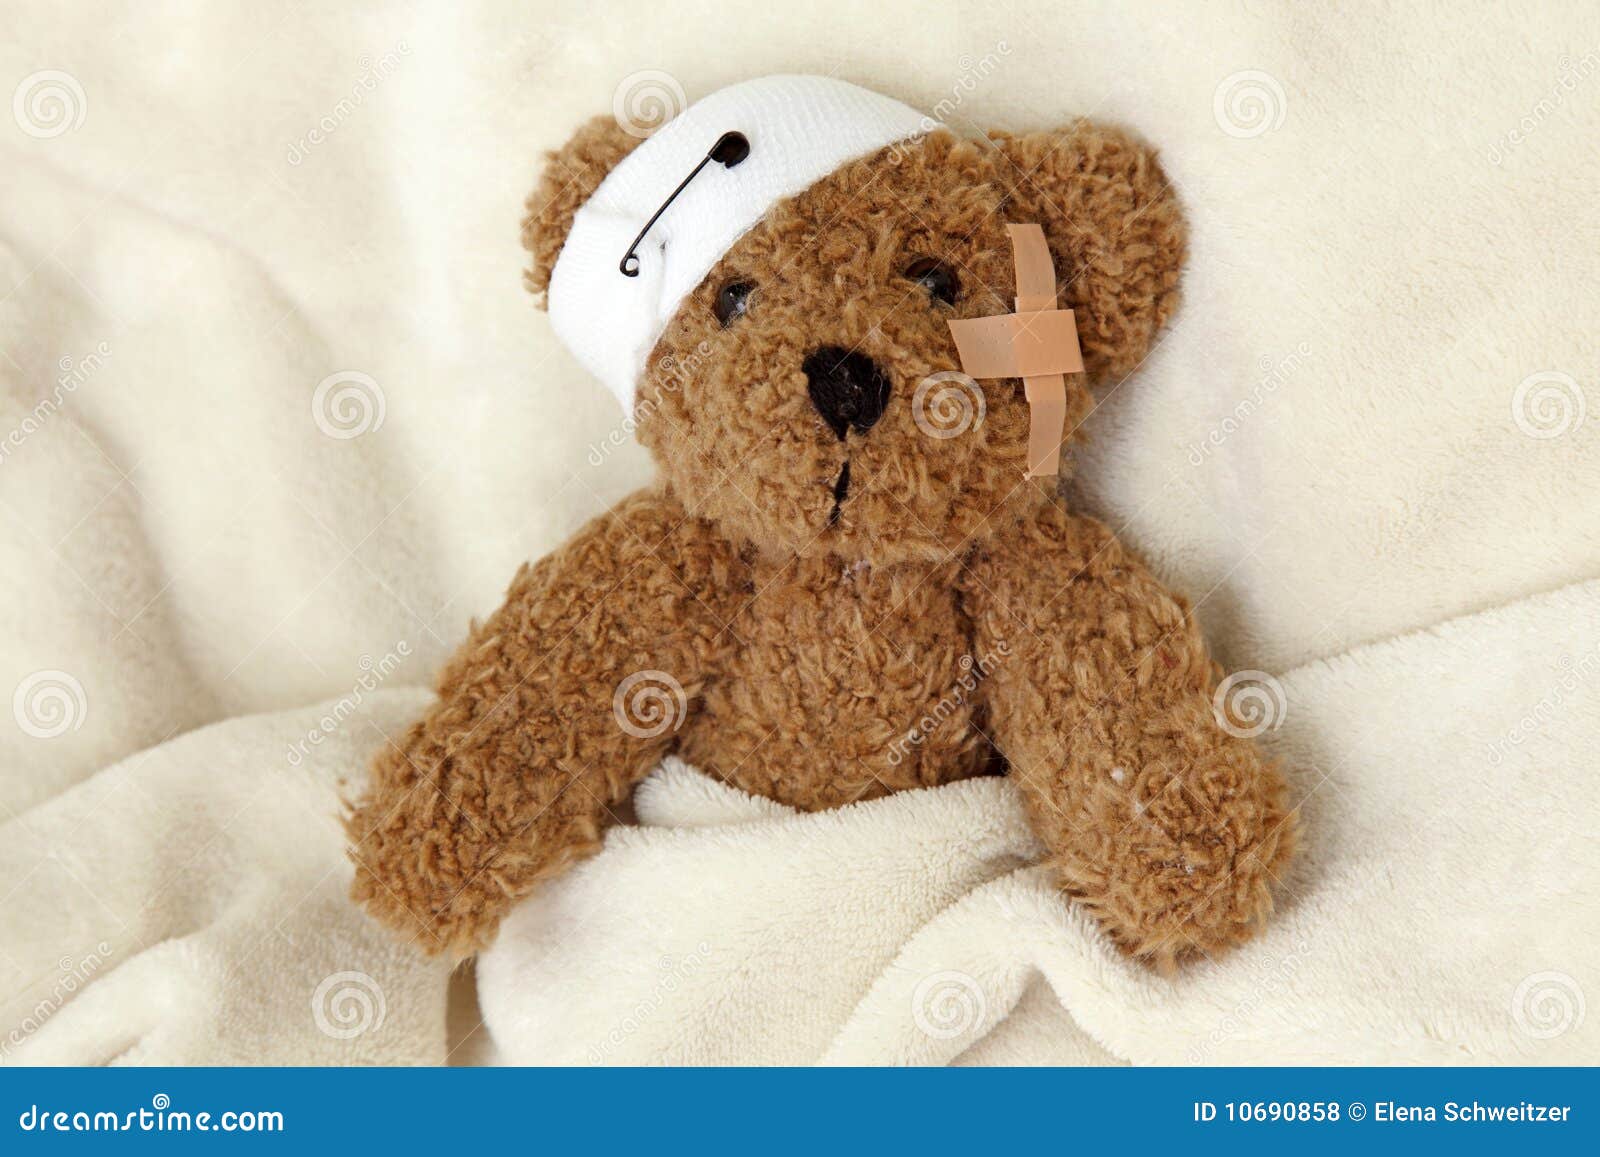 teddy bear ill